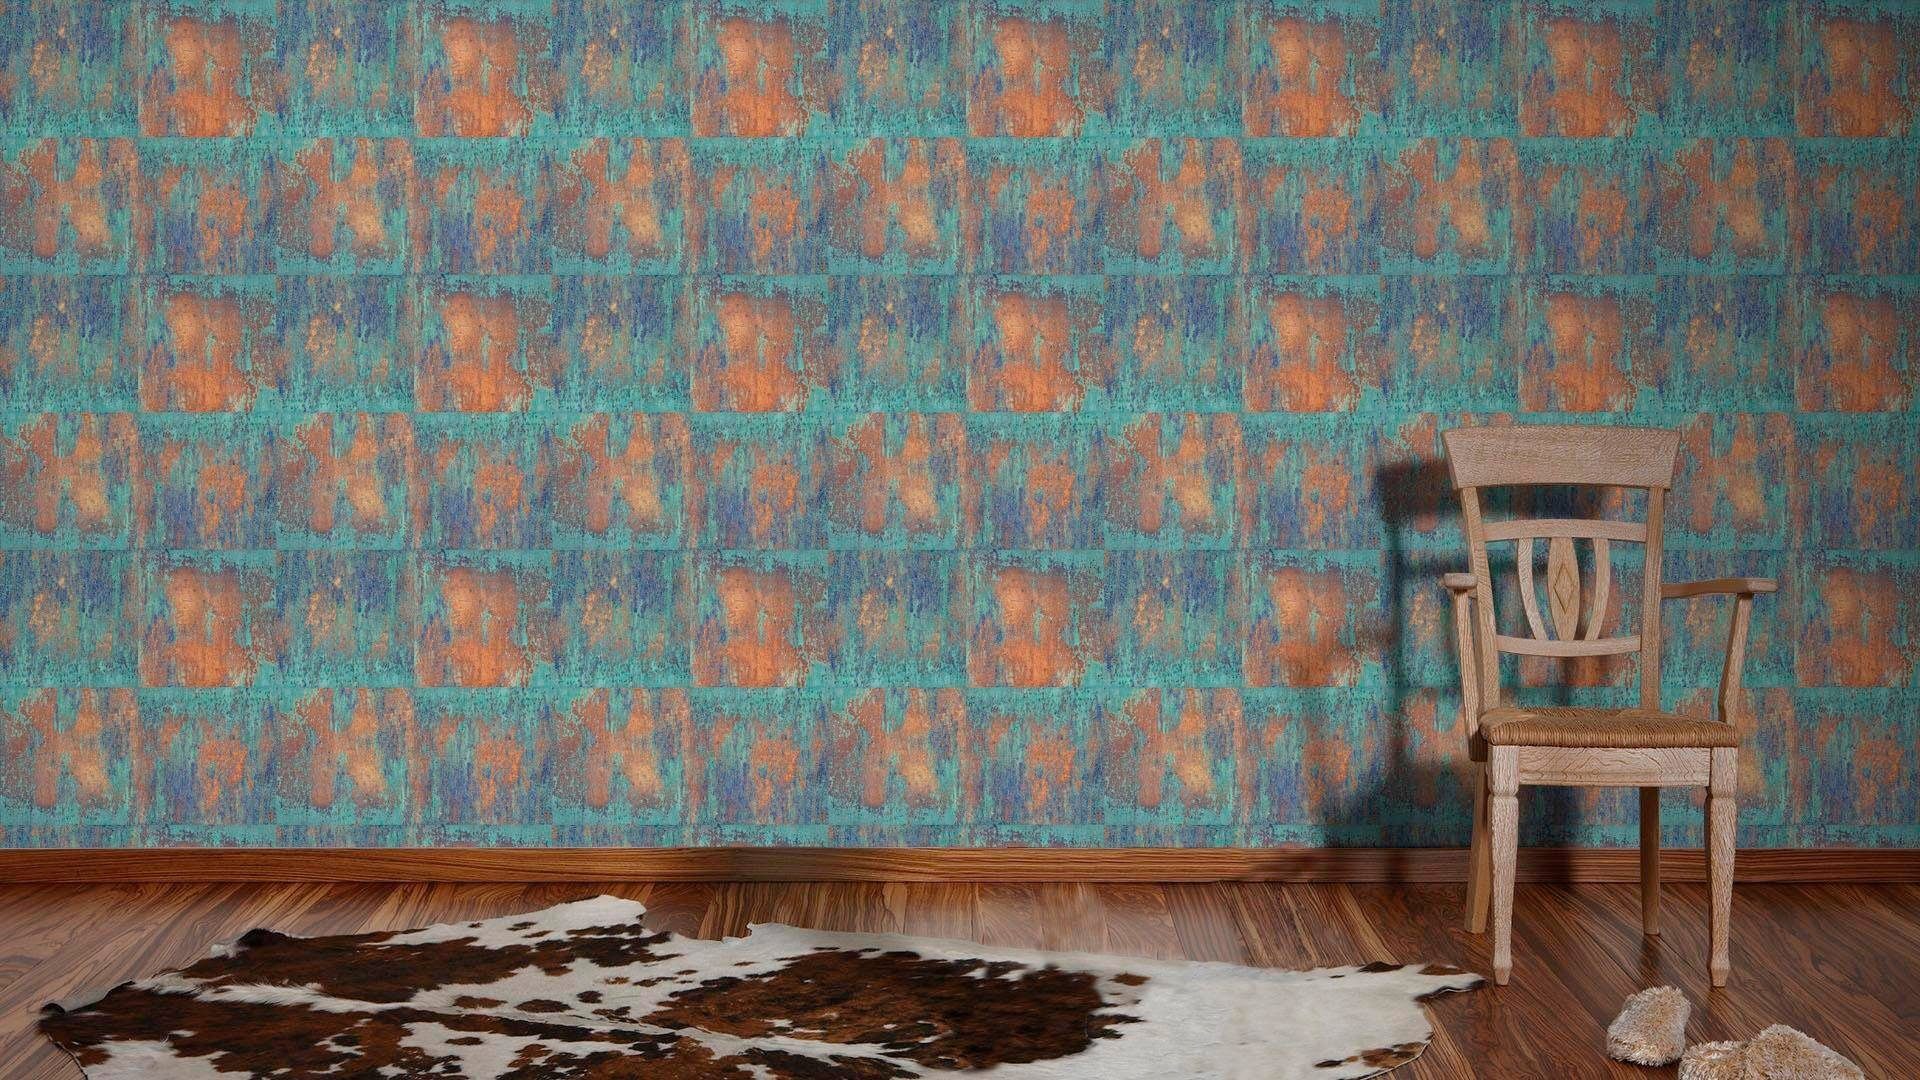 Materials, living walls Création Tapete Rost-Optik, A.S. Metallic türkis/rostbraun/blau Vliestapete Rostoptik